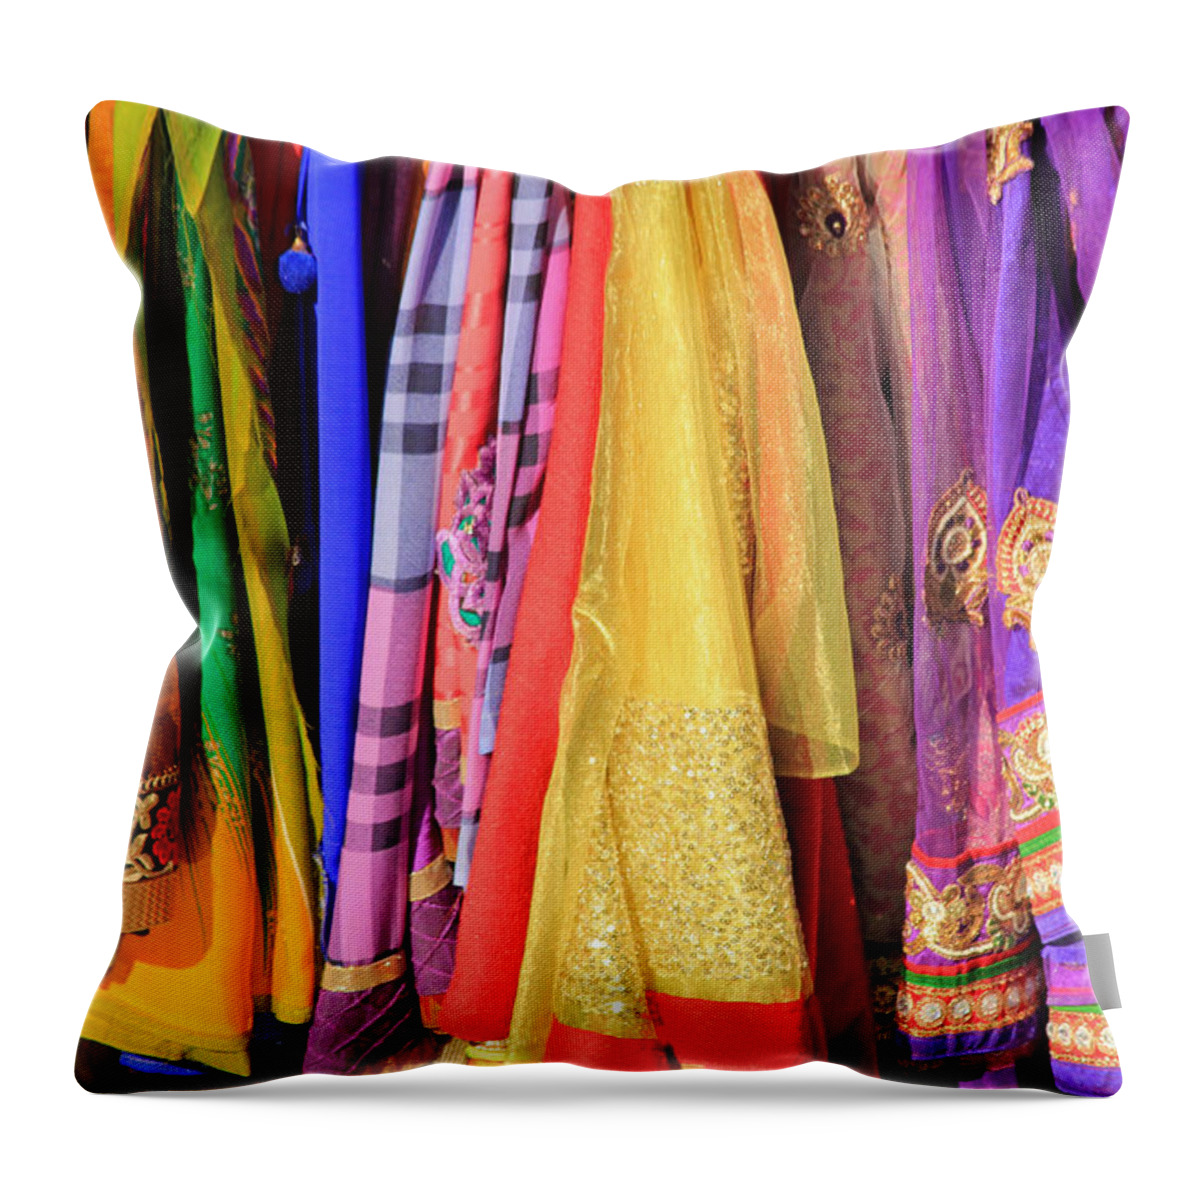 Mumbai Throw Pillow featuring the photograph Indian Sarees by E Faithe Lester